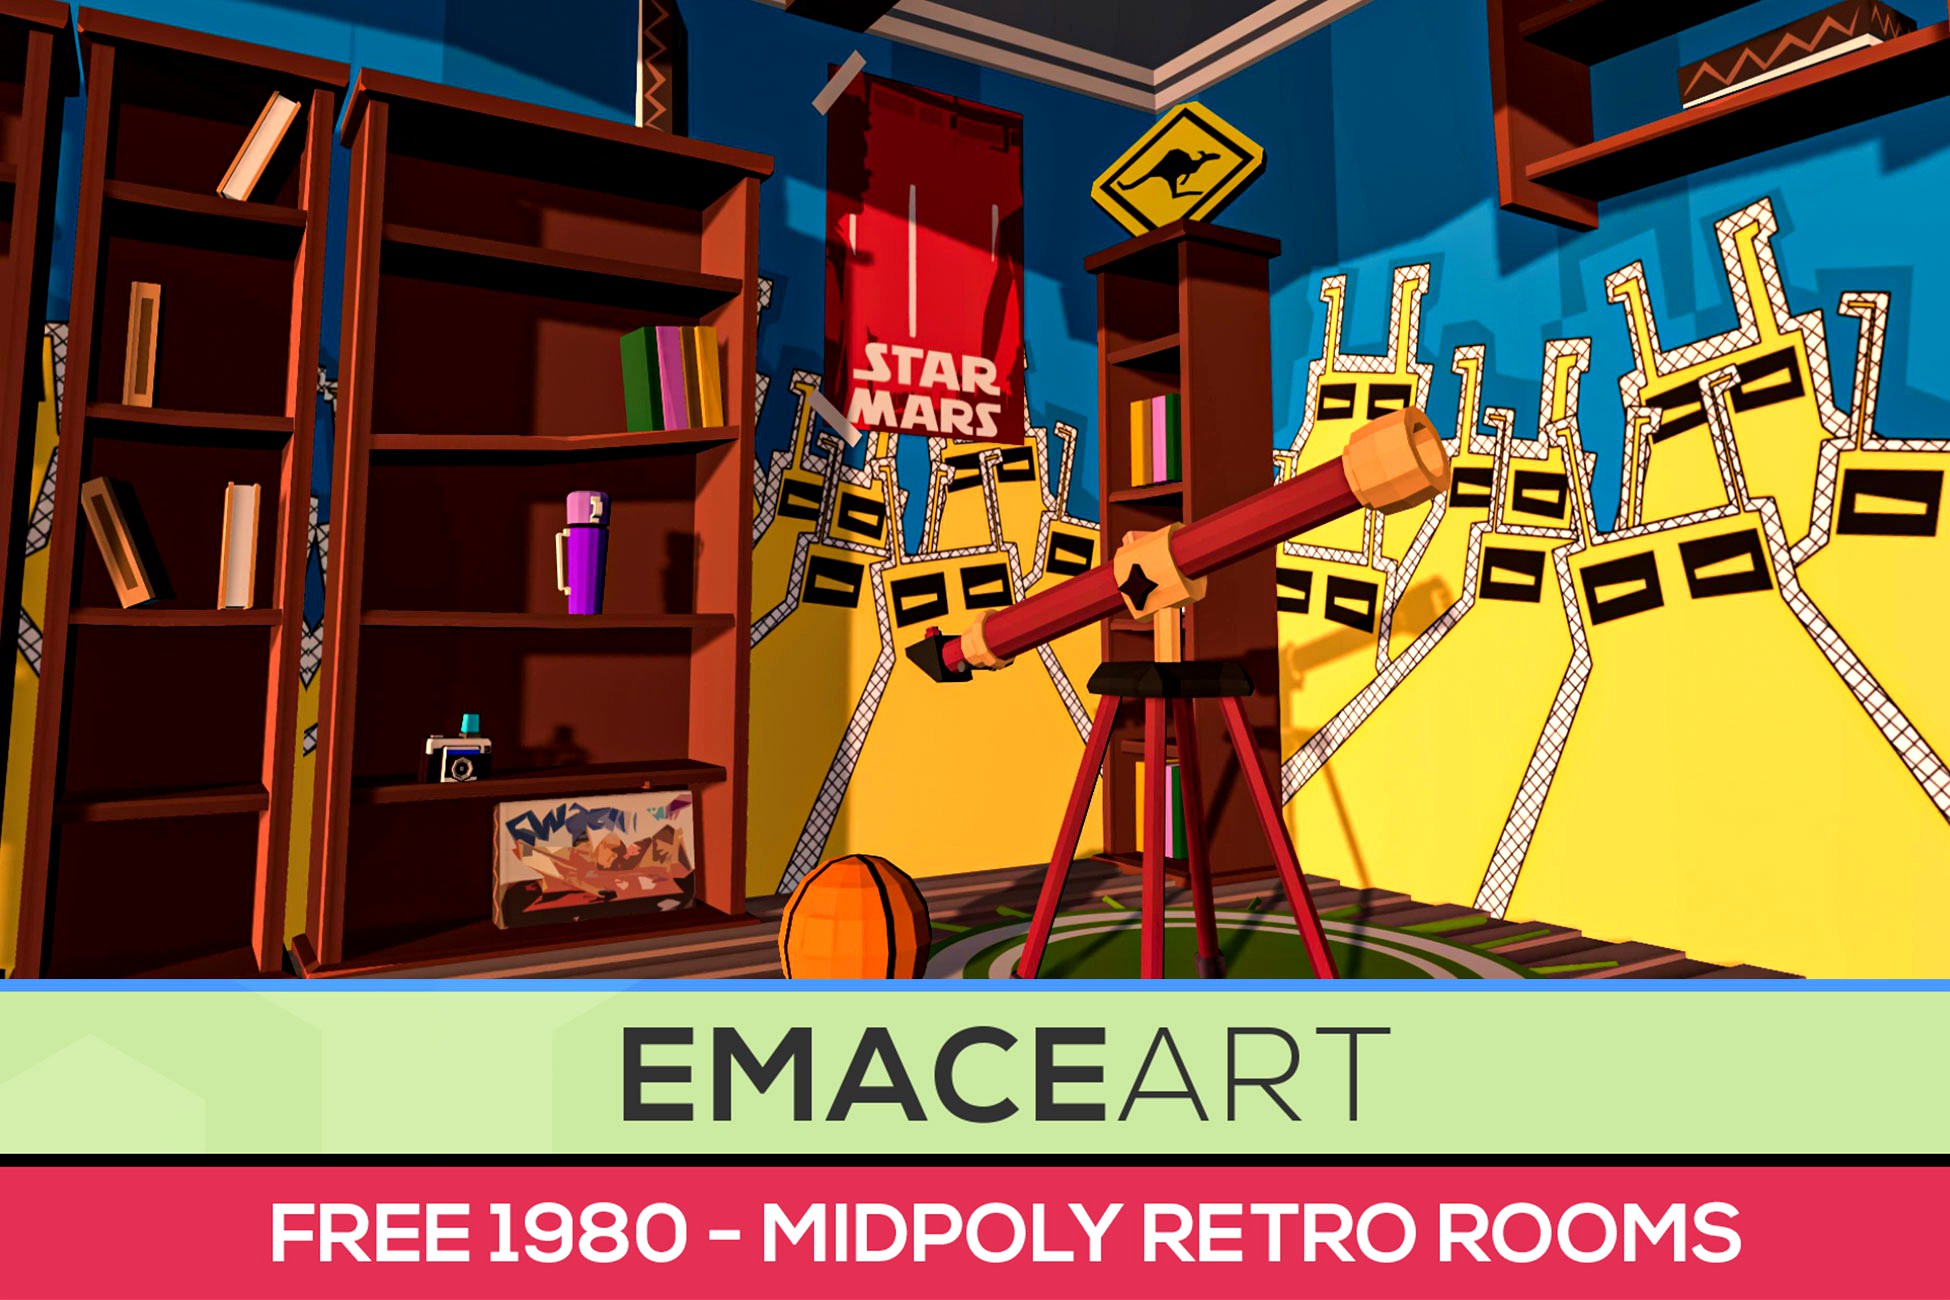 Free 1980 - MidPoly Retro Rooms